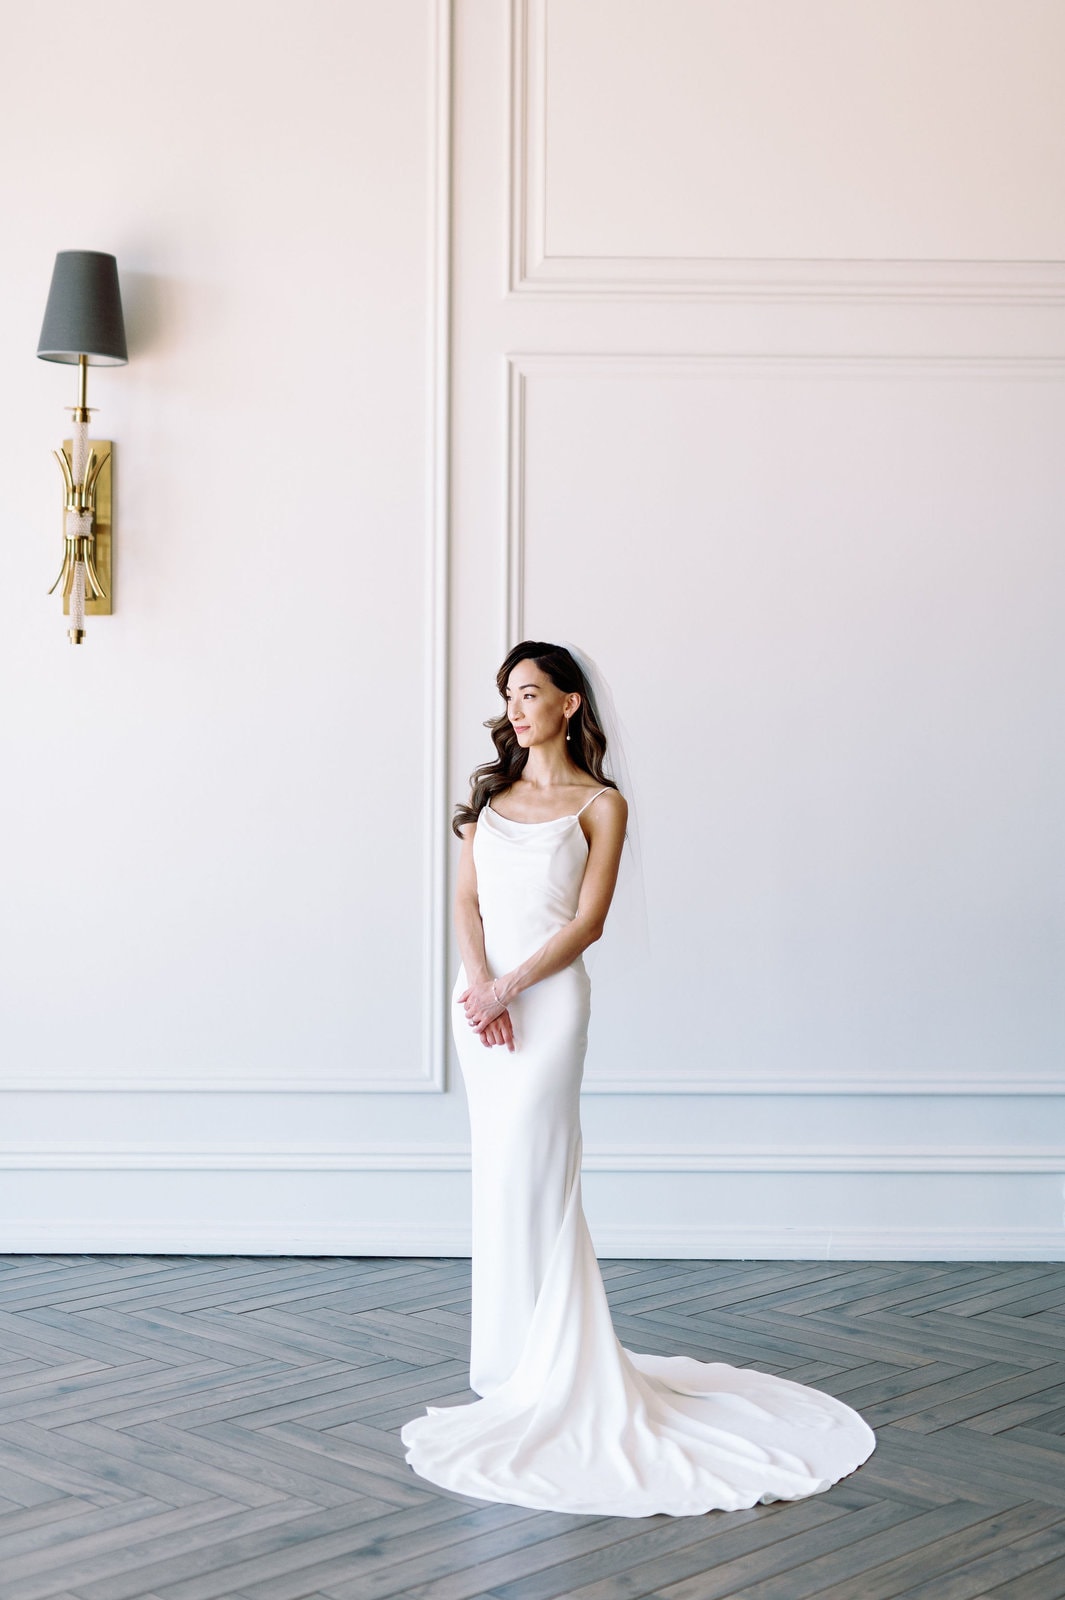 Bride Editorial Elegant Sophisticated Toronto Portrait at Arlington Estate Wedding Venue, Summer Intimate Elopement| Jacqueline James Photography